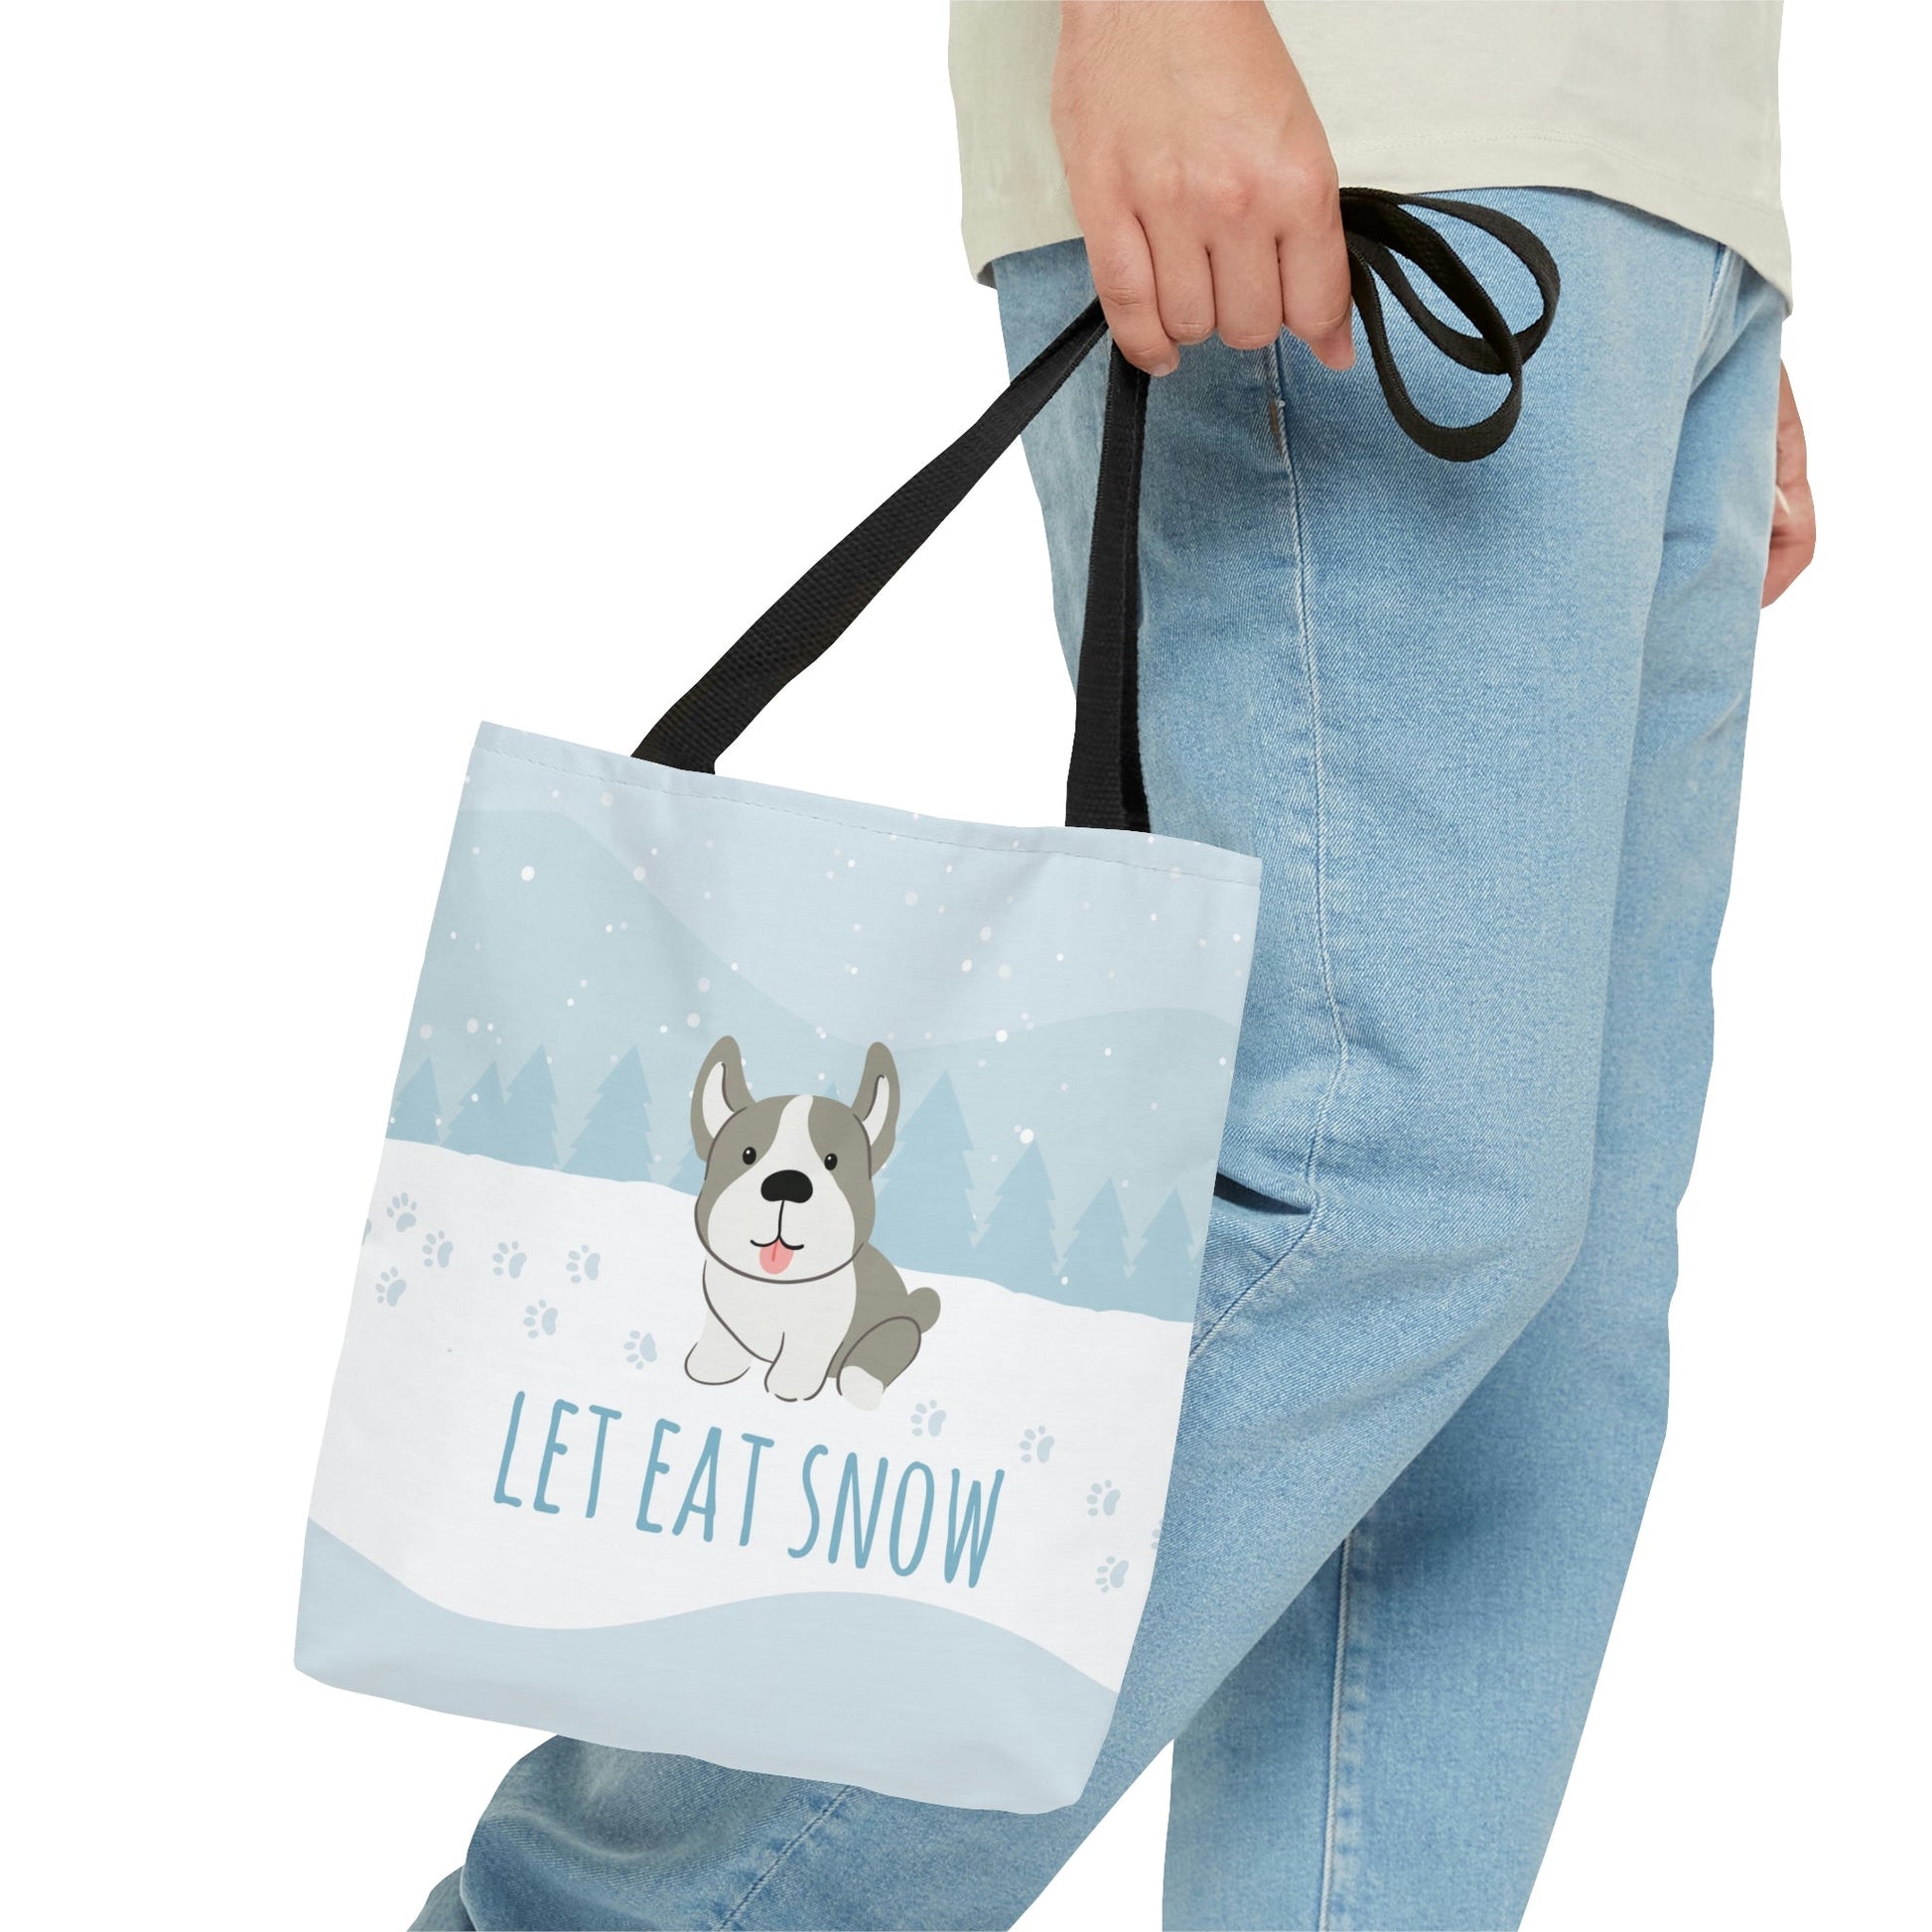 Let Eat Snow Cute Dog Anime Snow AOP Tote Bag Ichaku [Perfect Gifts Selection]